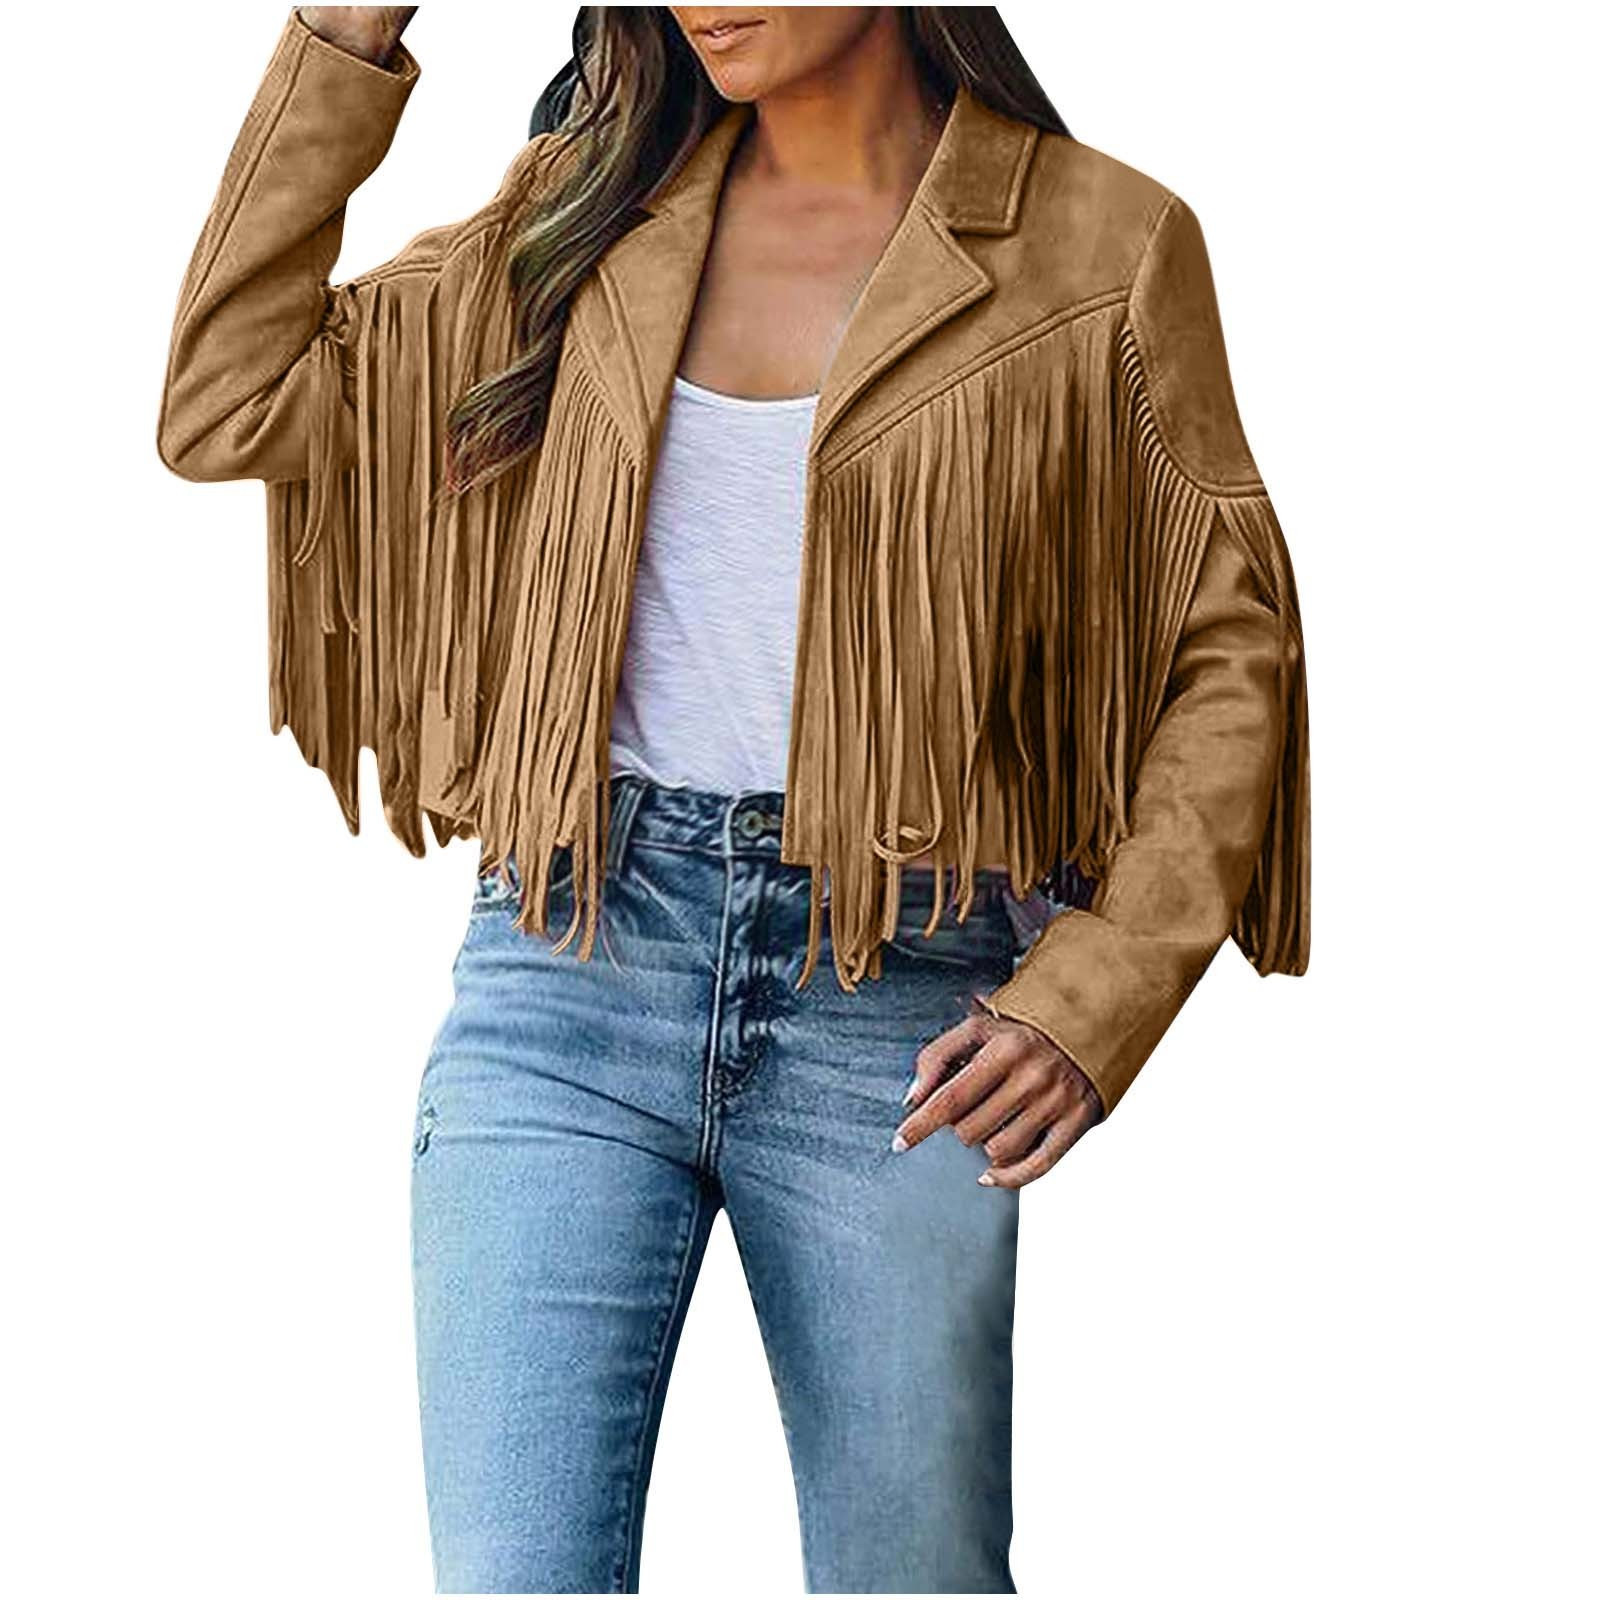 Women Vintage Faux Suede Tassel Cropped Jacket Long Sleeve Fringe Leather Coat Hippie Motorcycle Biker Jackets Tops - image 1 of 9